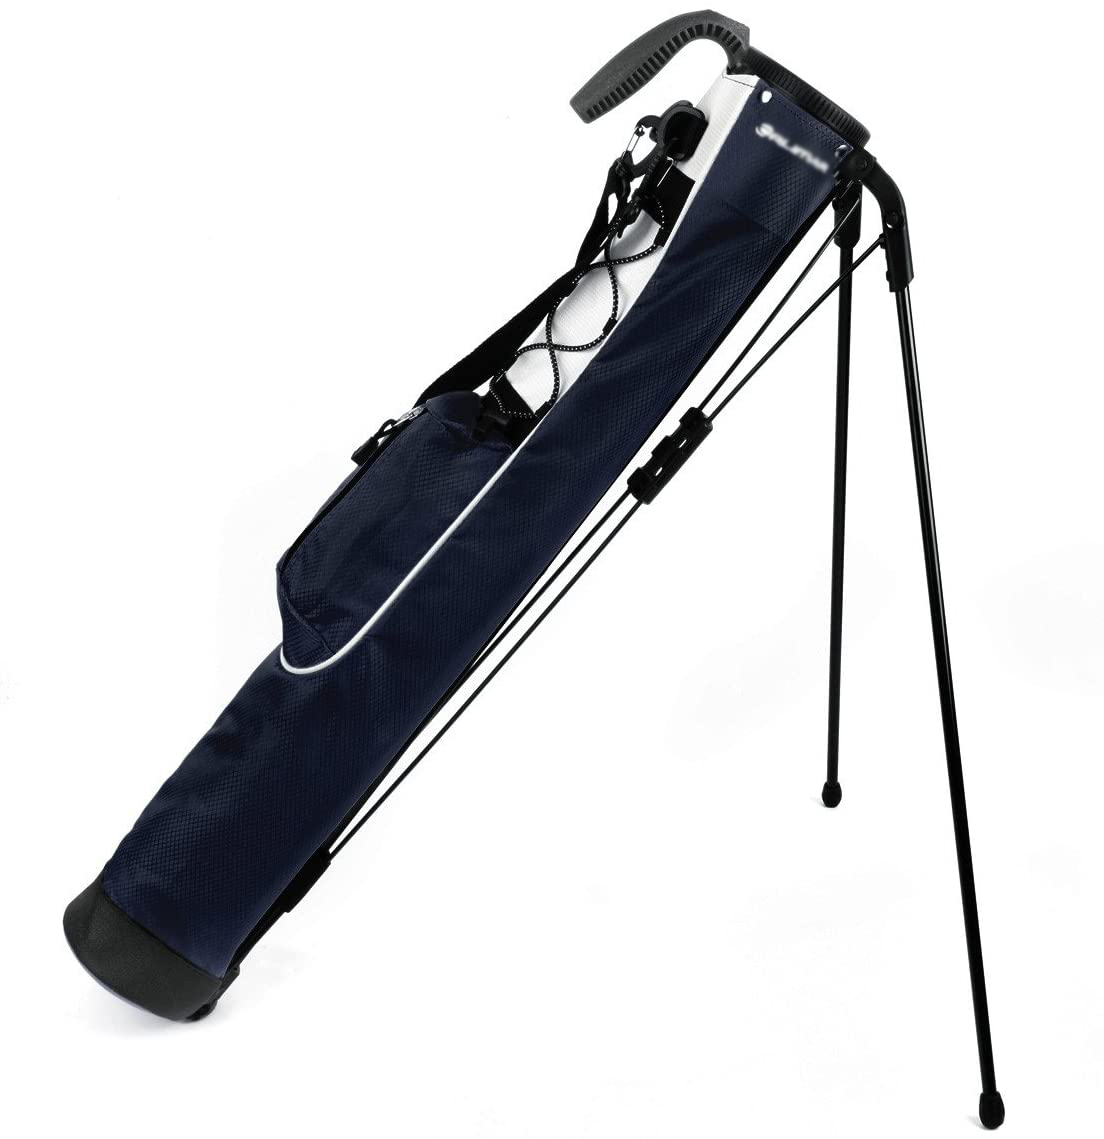 Acbags Lightweight Stand/Carry Golf Bag